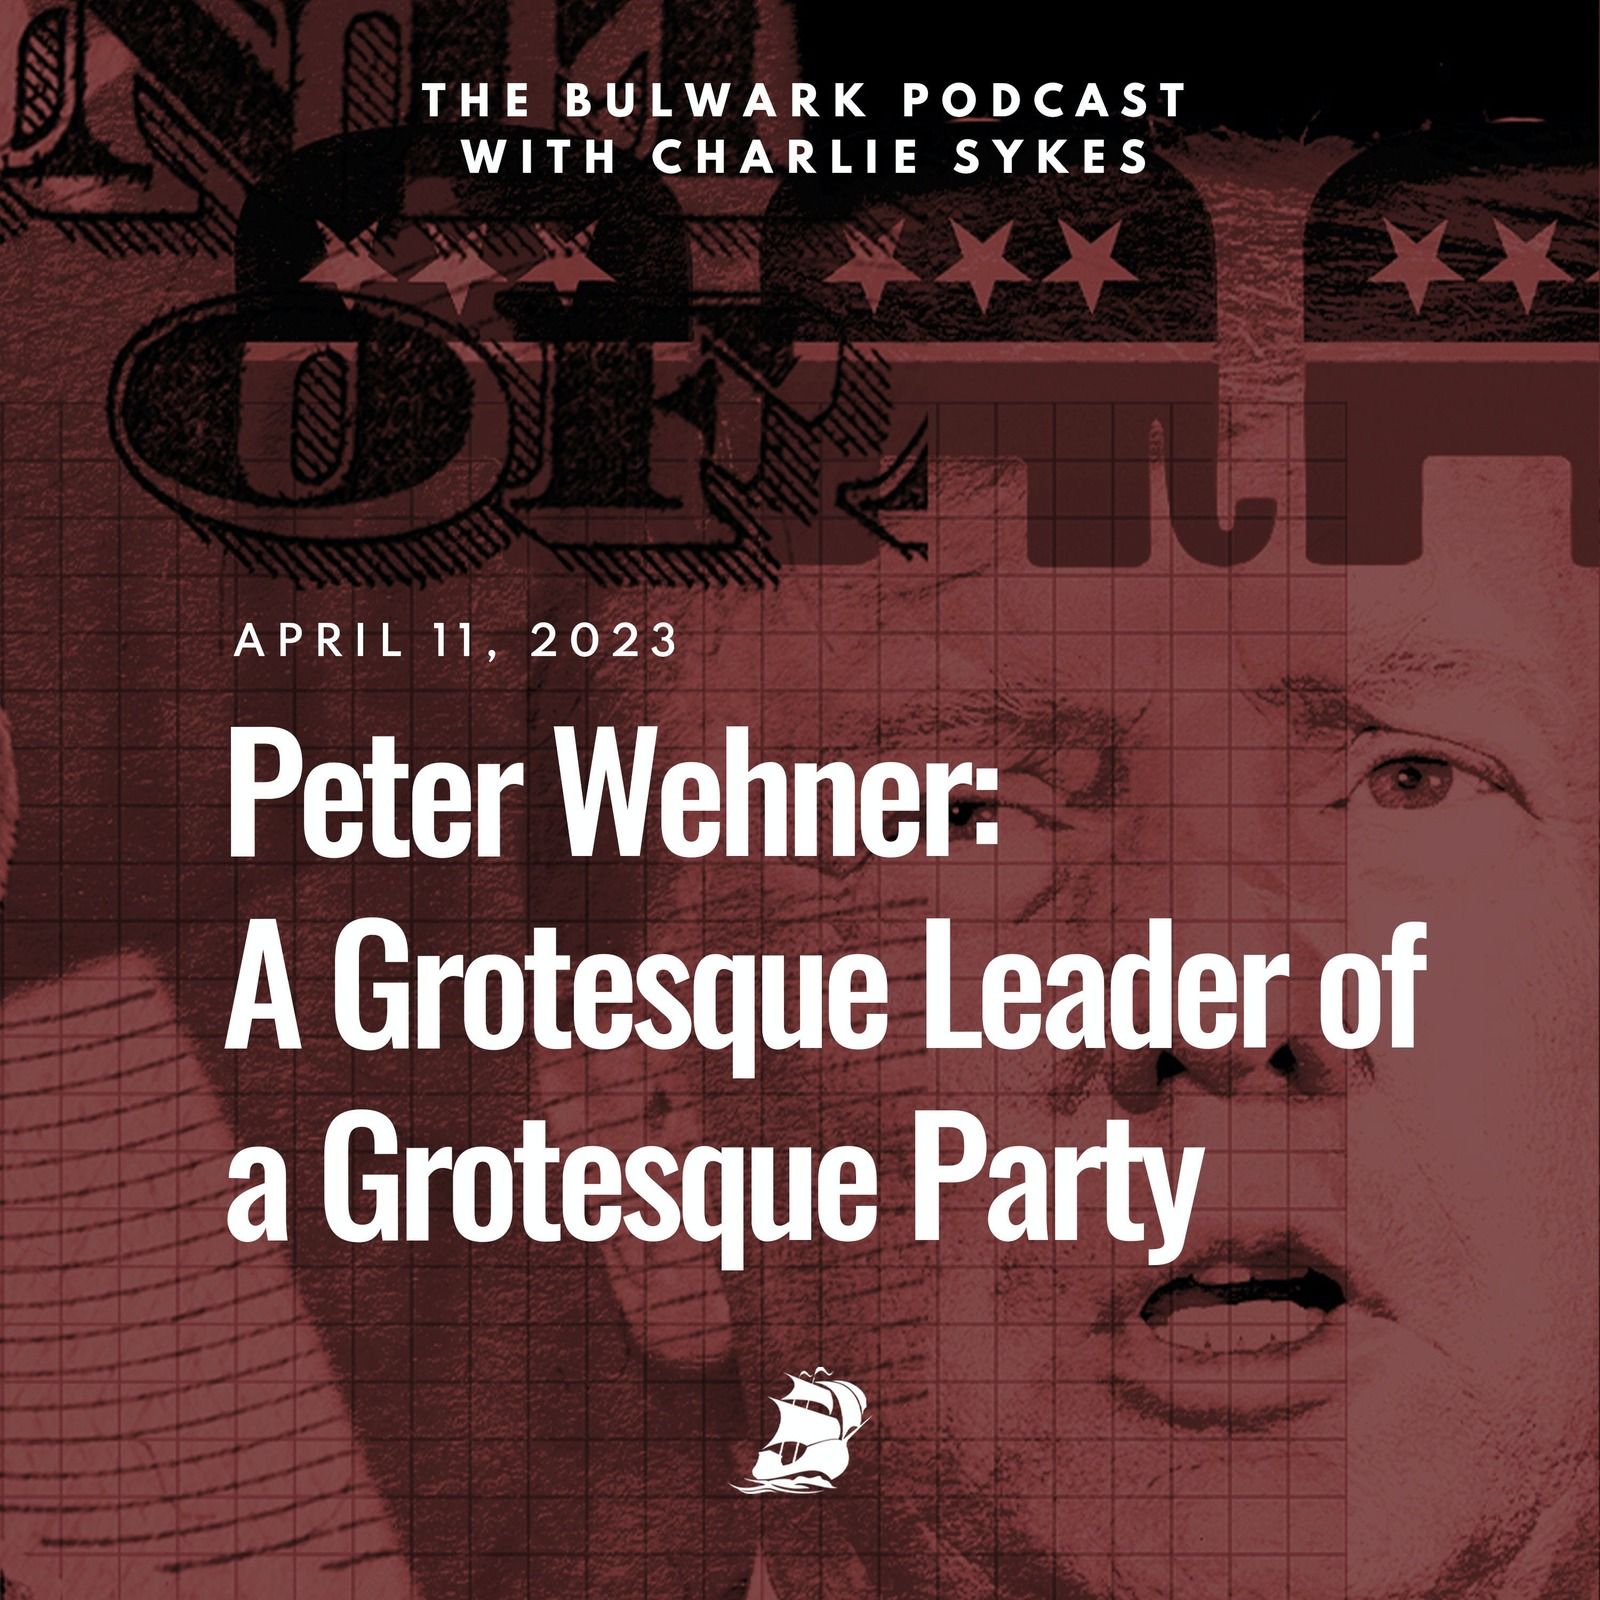 Peter Wehner: A Grotesque Leader of a Grotesque Party